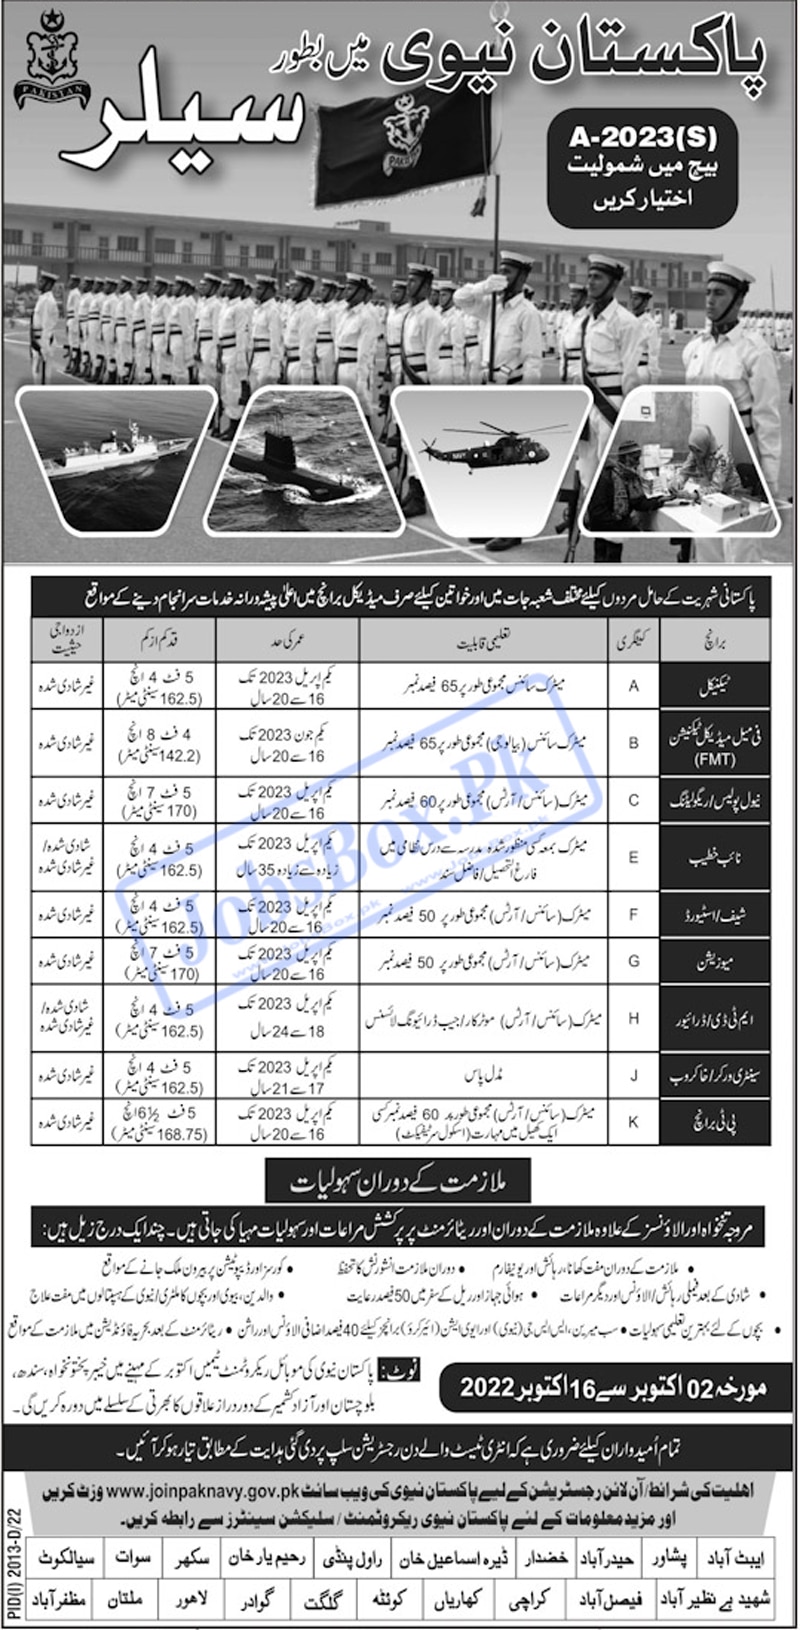 Join Pakistan Navy Sailor Jobs October 2022 Batch A-2023(S) Recruitment